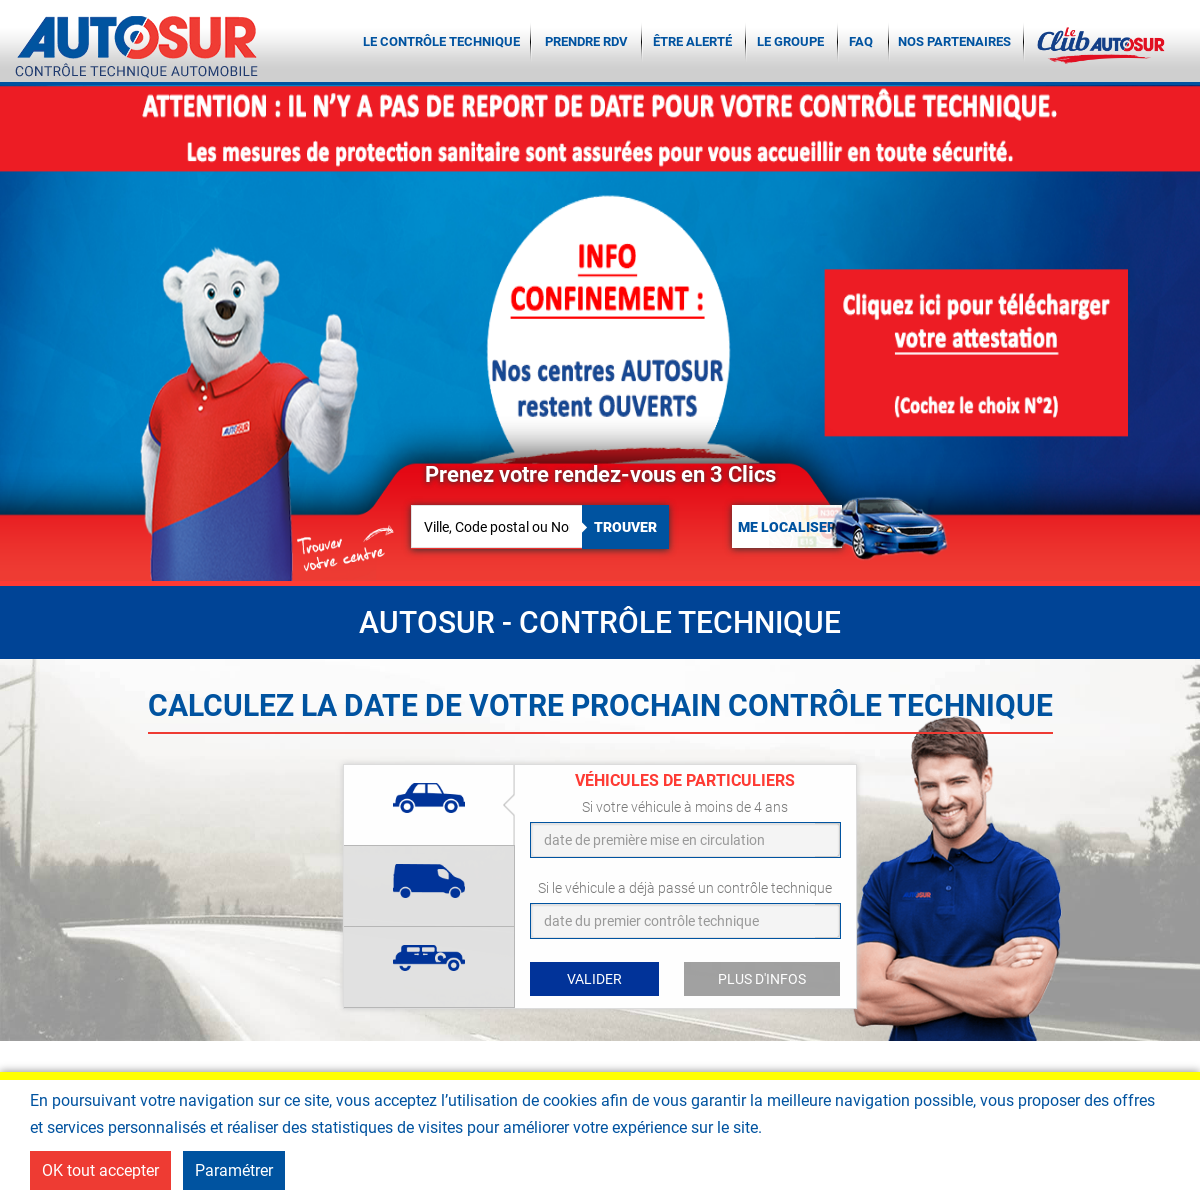 A complete backup of autosur.fr